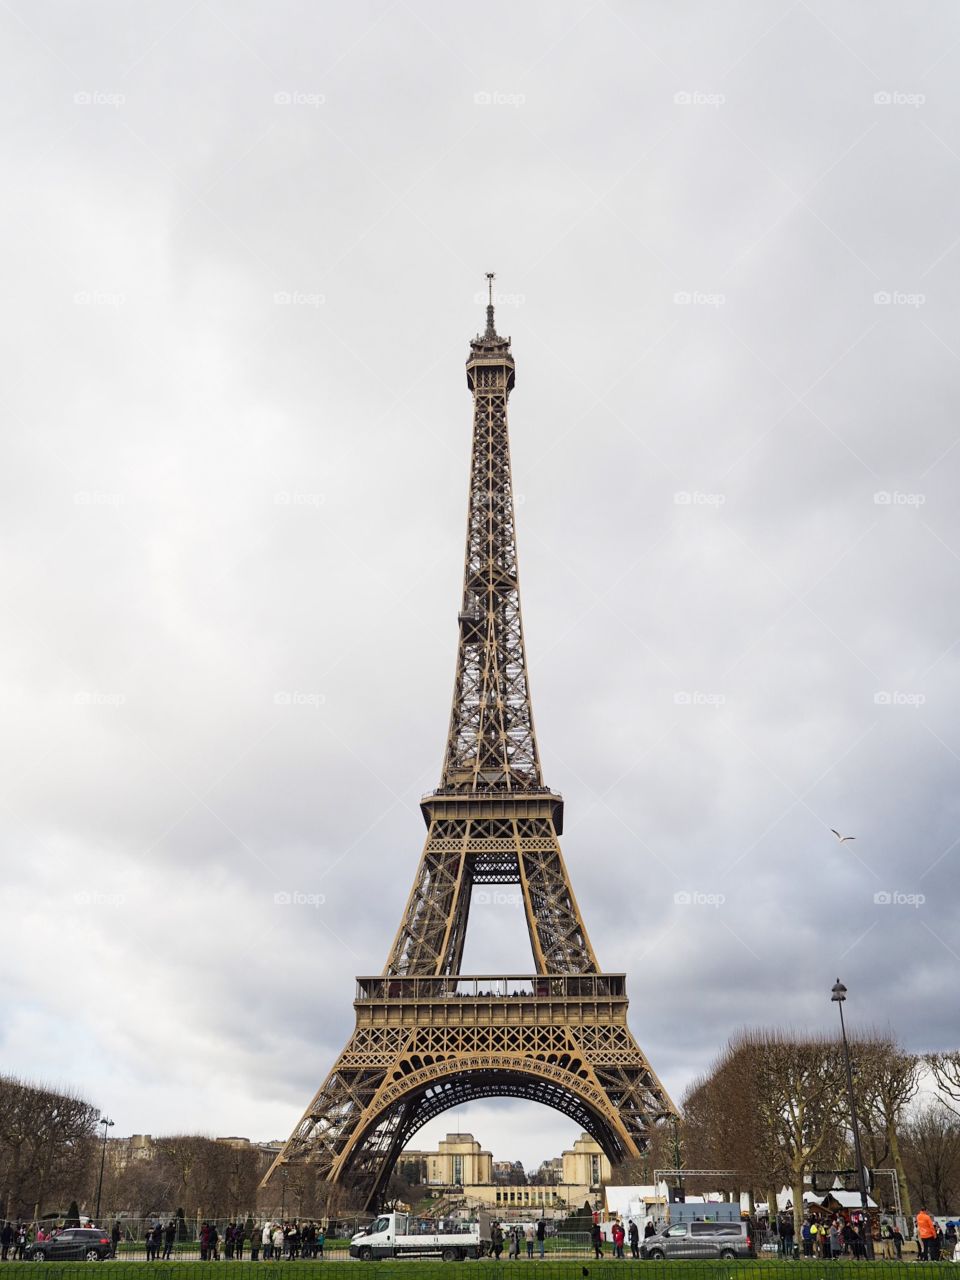 Eiffel Tower is amazing landmark of Paris! 